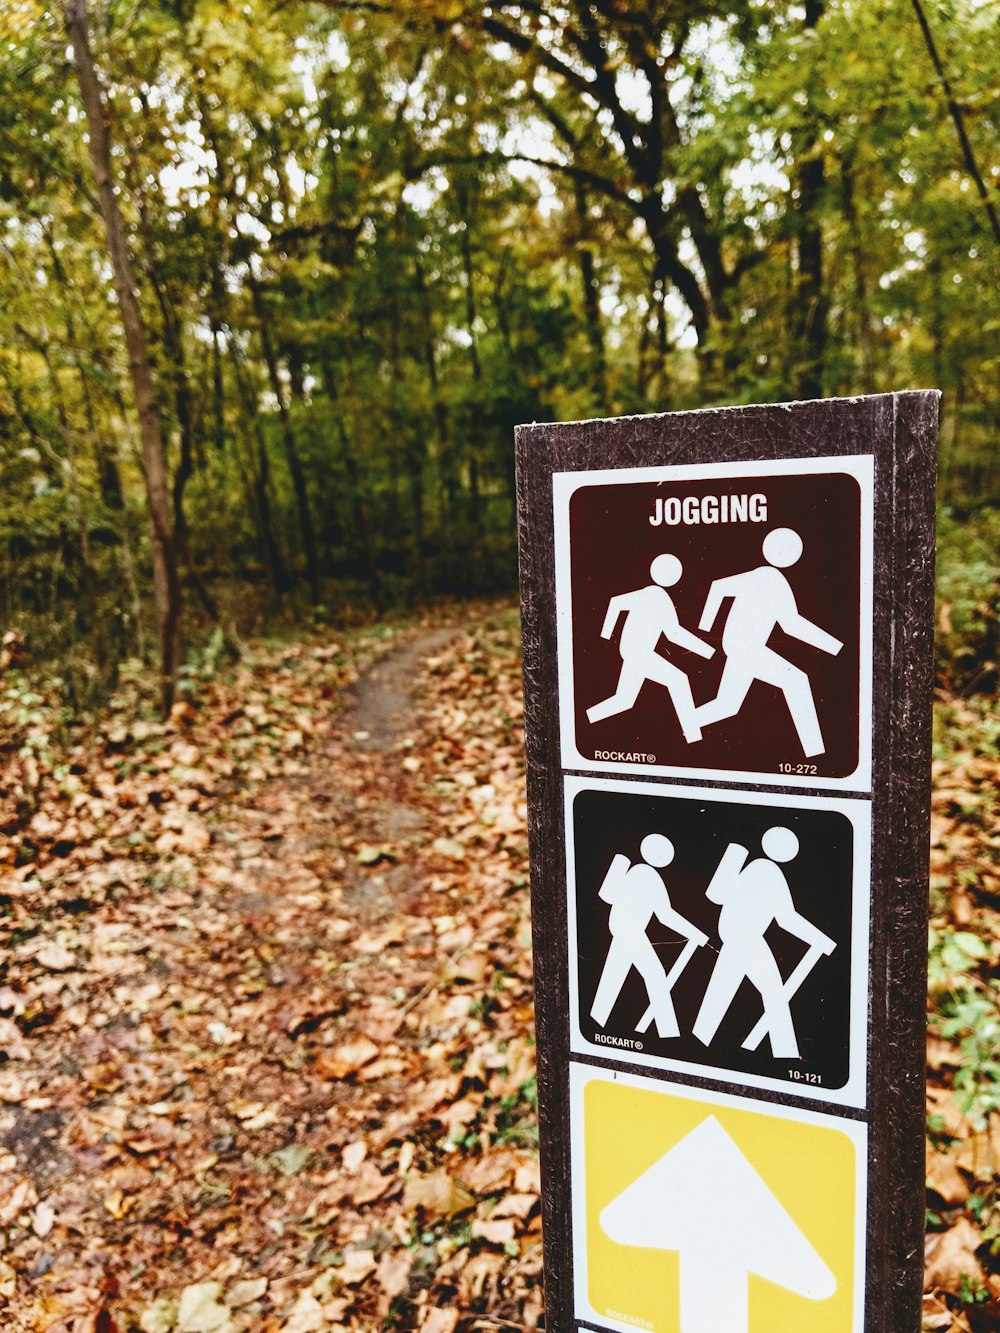 Jogging signage